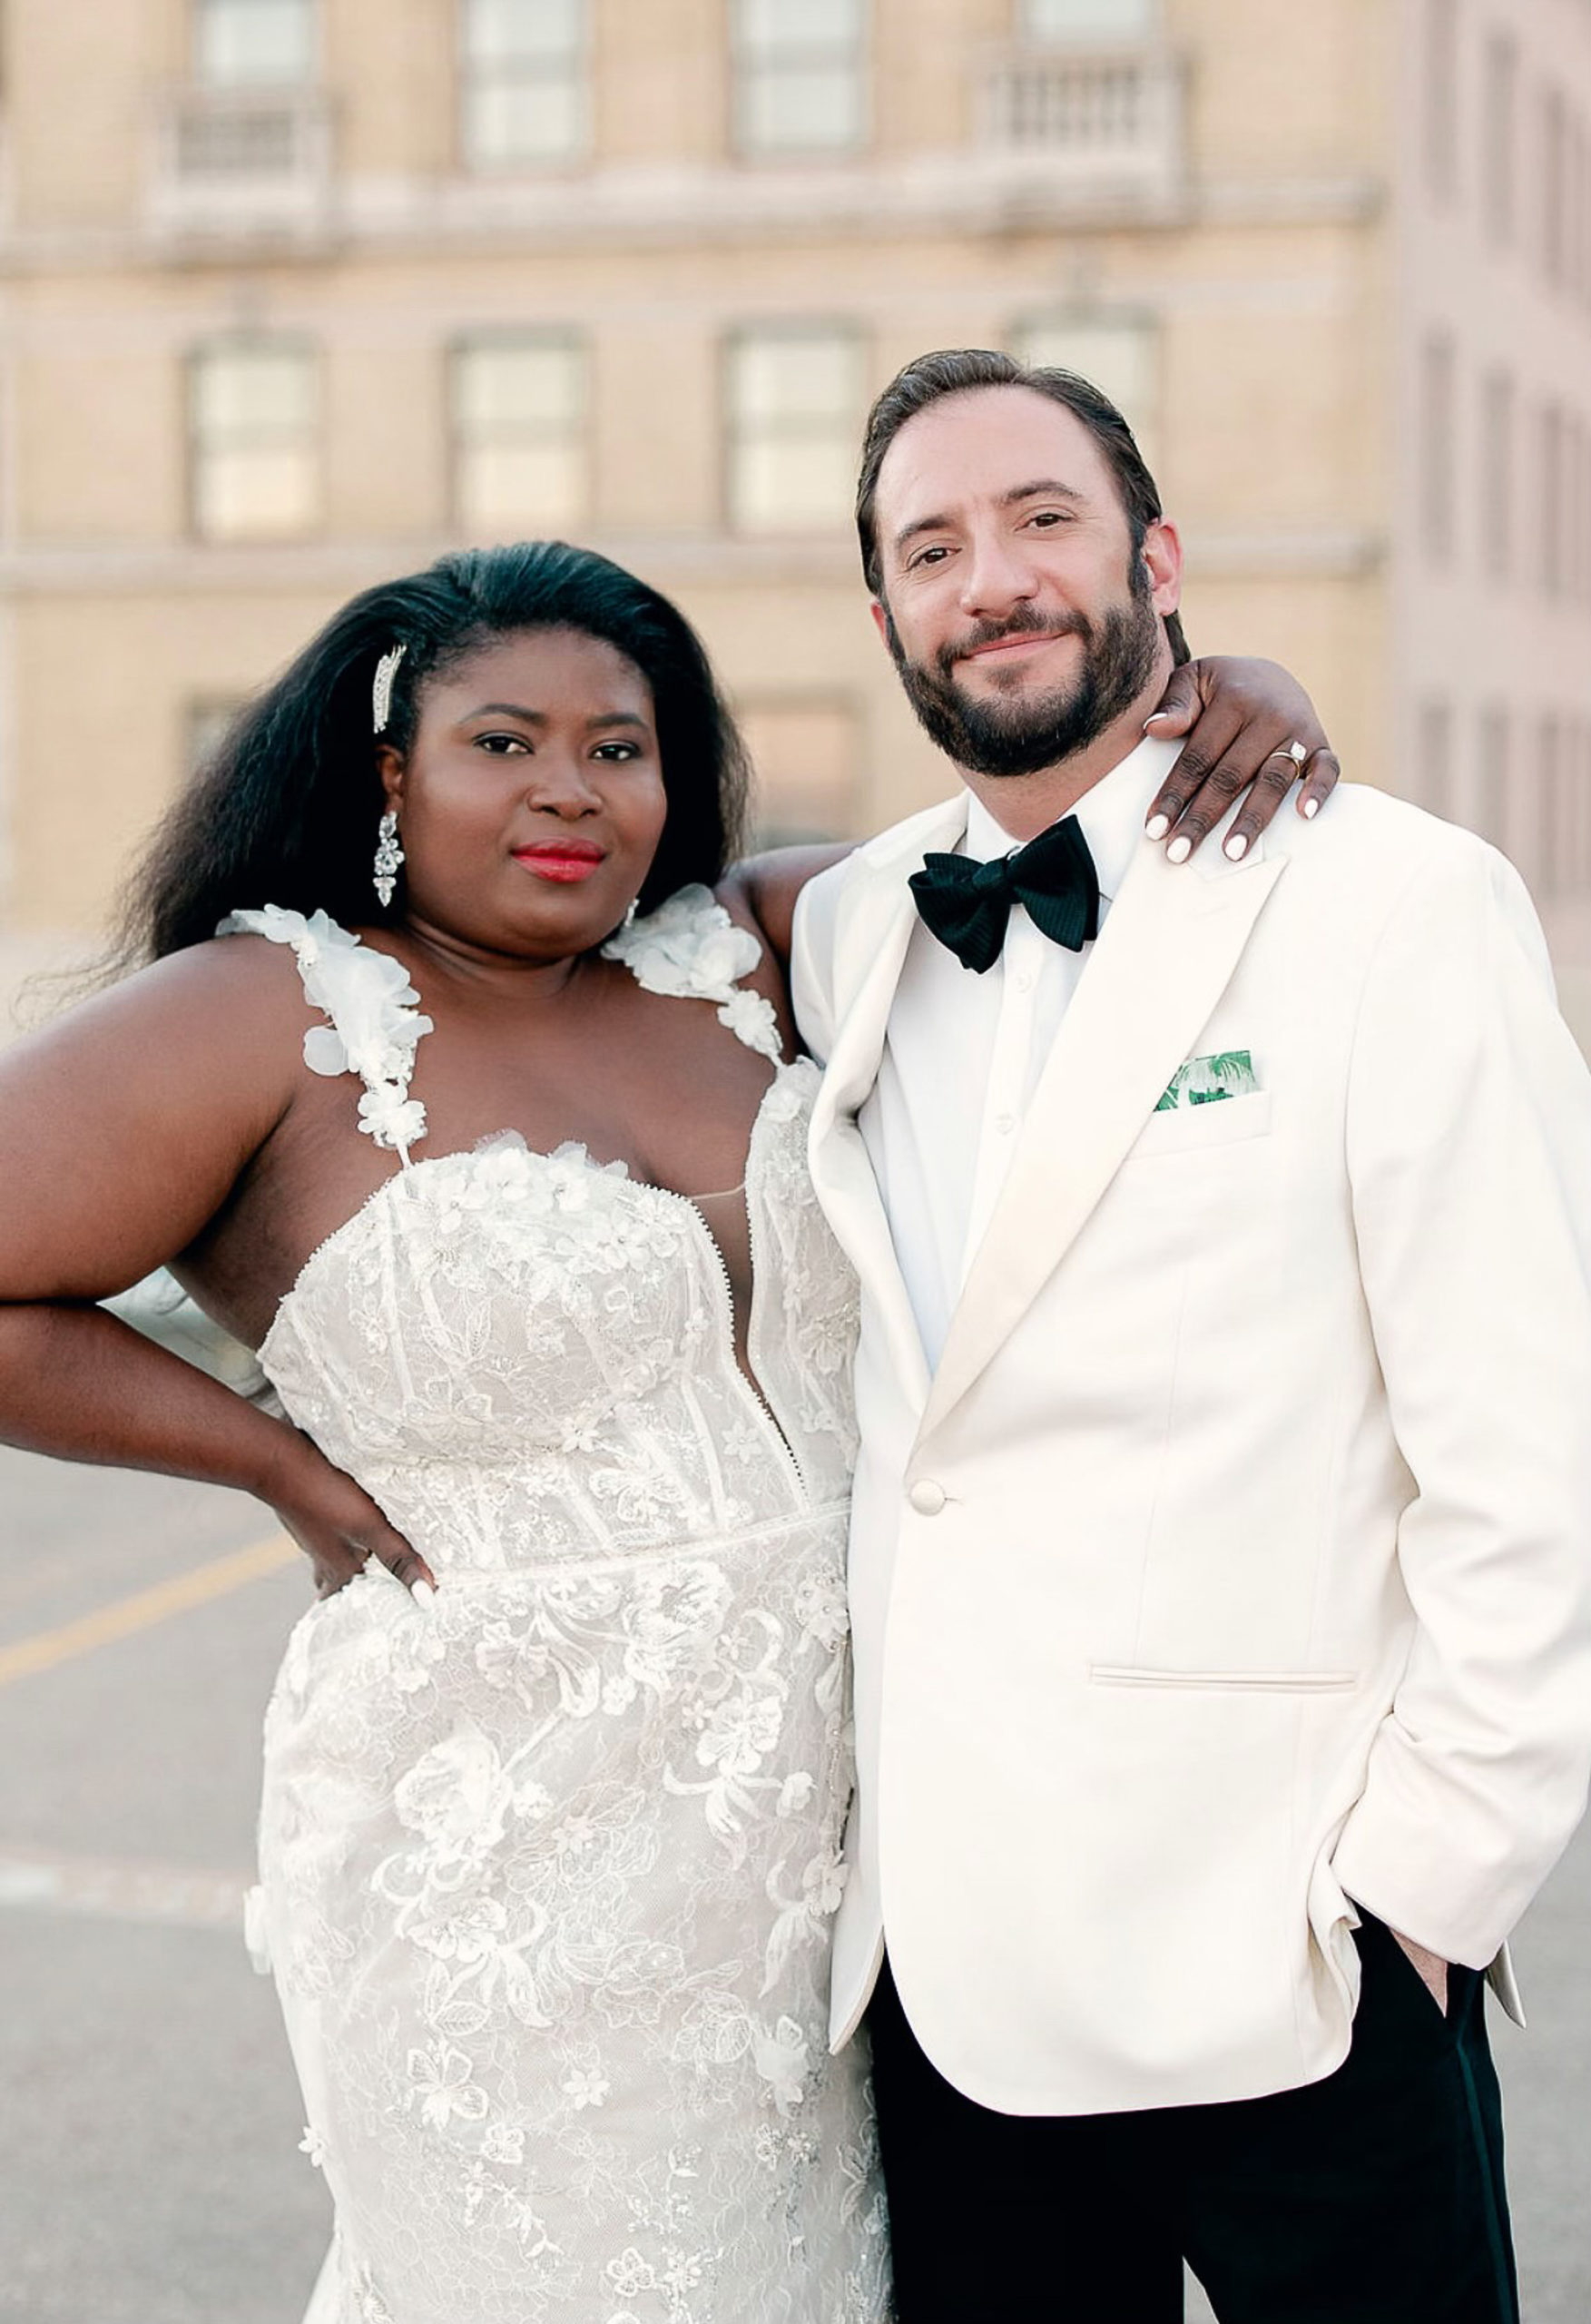 Glamazon Diaries wedding gown - David's Bridal spring 2021 campaign - plus size bride spring interracial couple